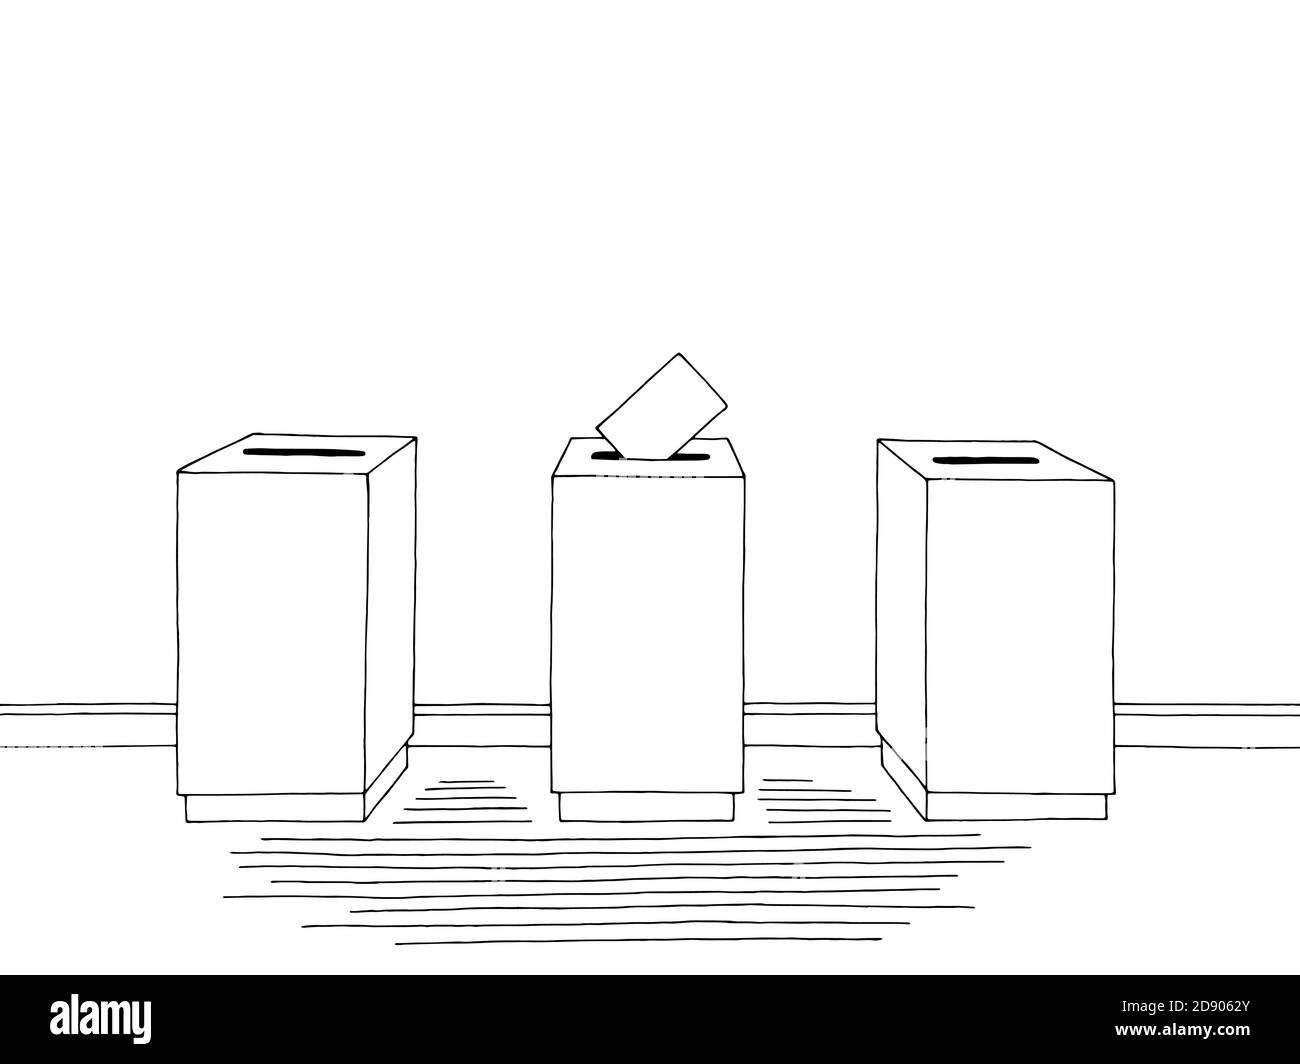 Elections interior vote bulletin put into ballot box graphic black white sketch illustration vector Stock Vector